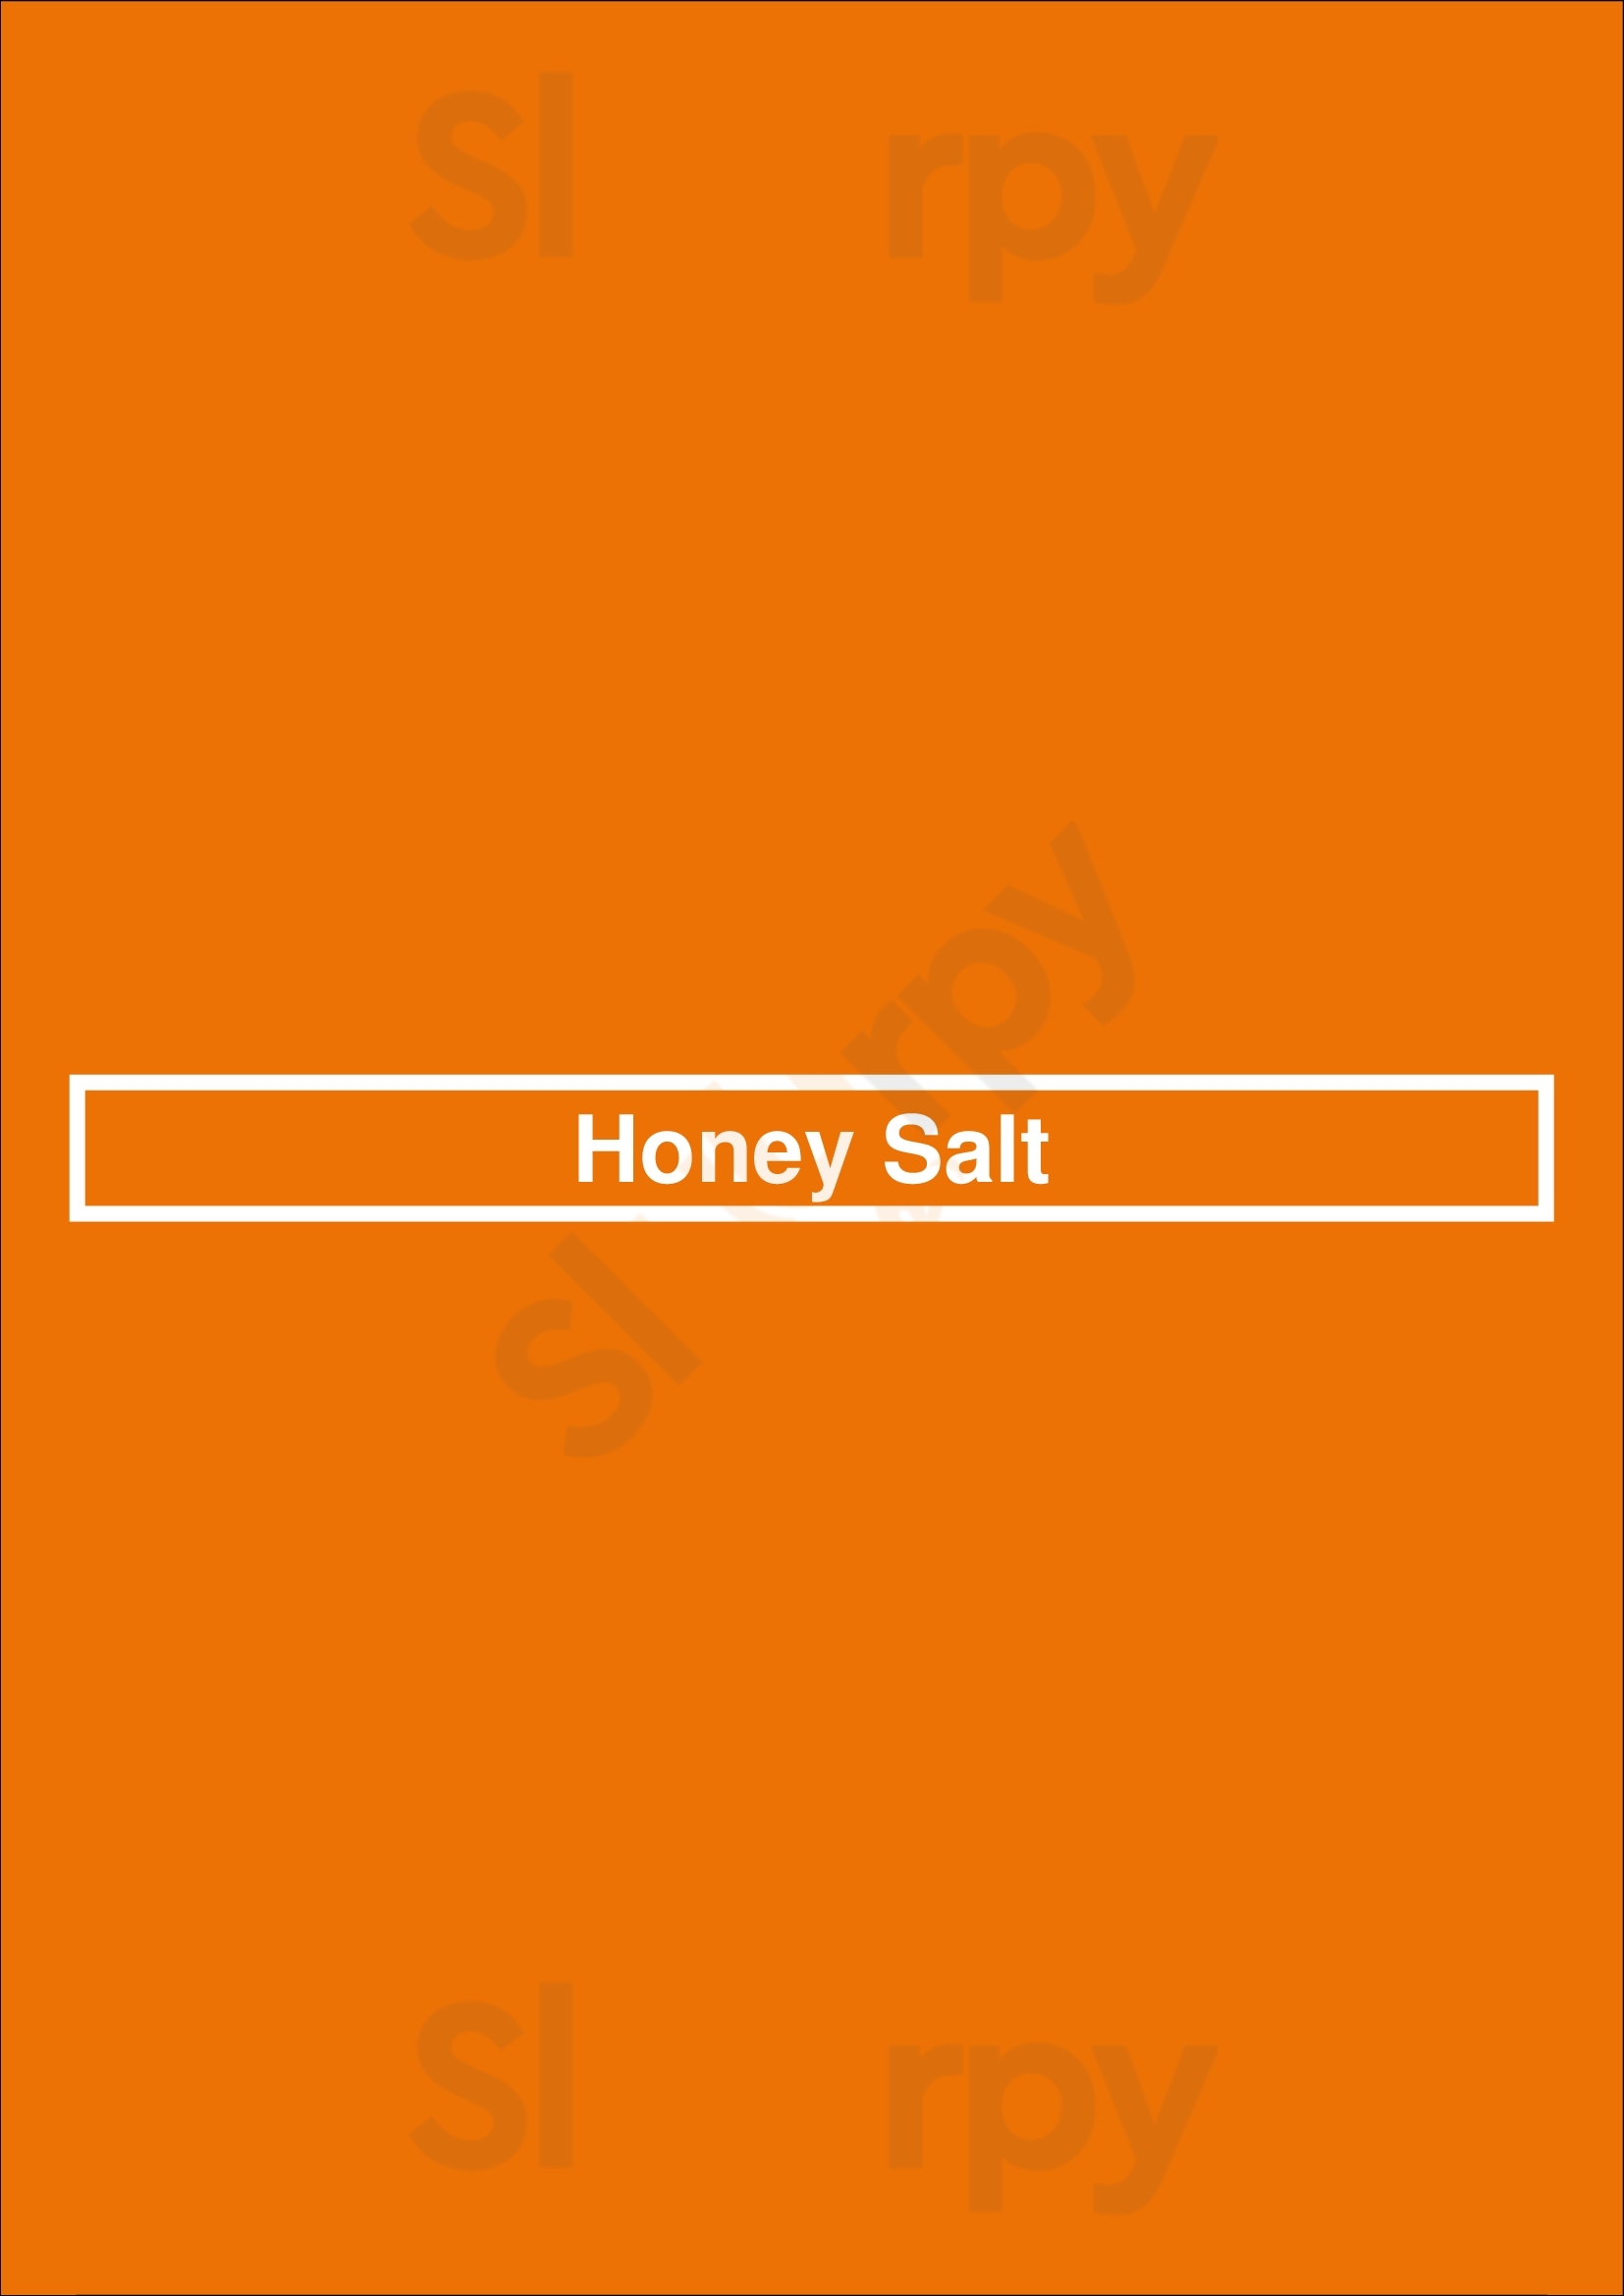 Honey Salt Vancouver Menu - 1